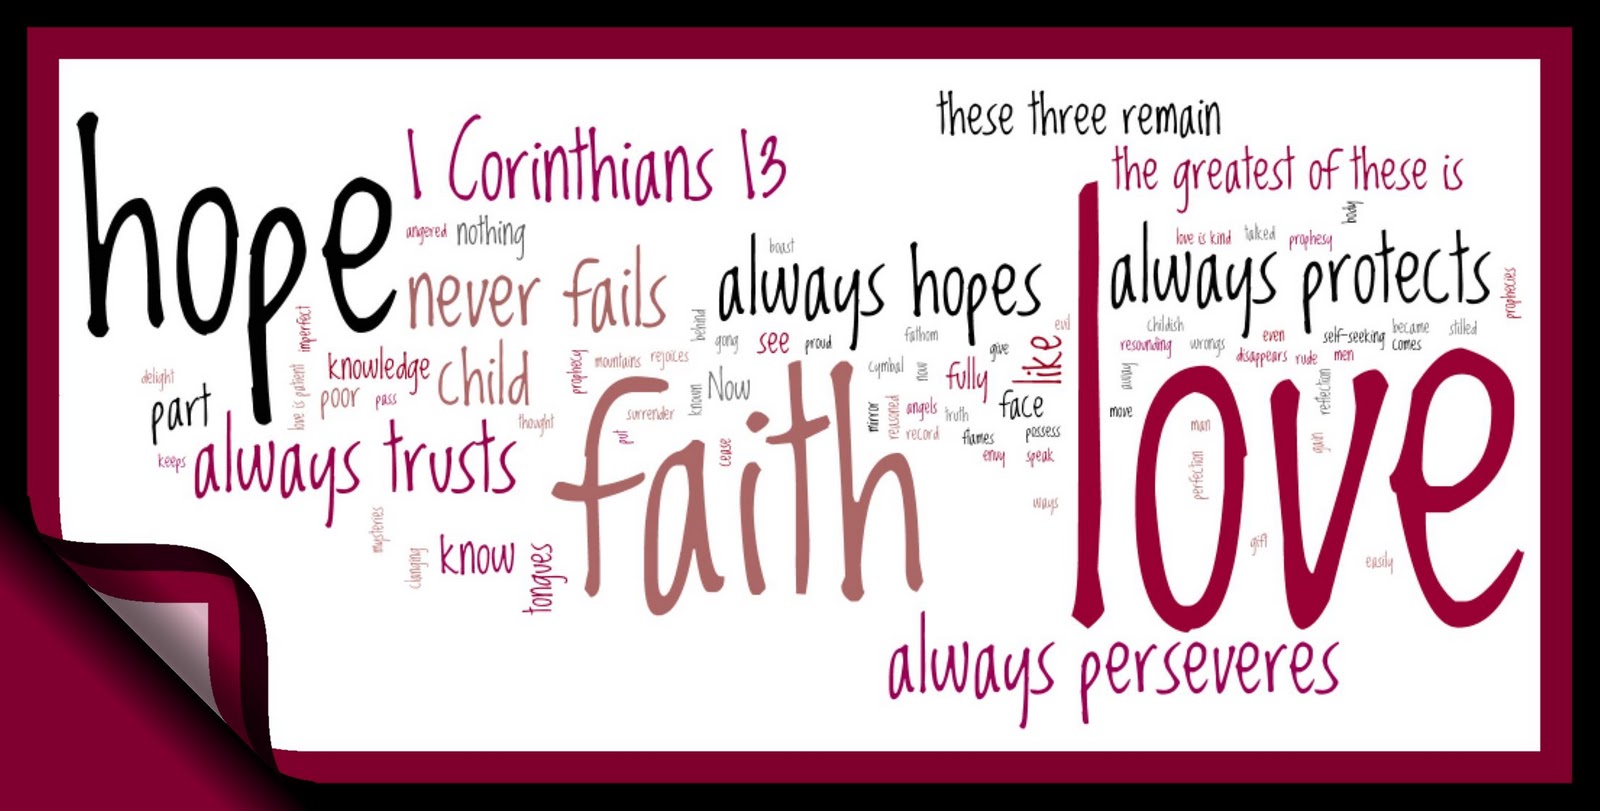 [49+] 1 Corinthians 13 Wallpaper on WallpaperSafari